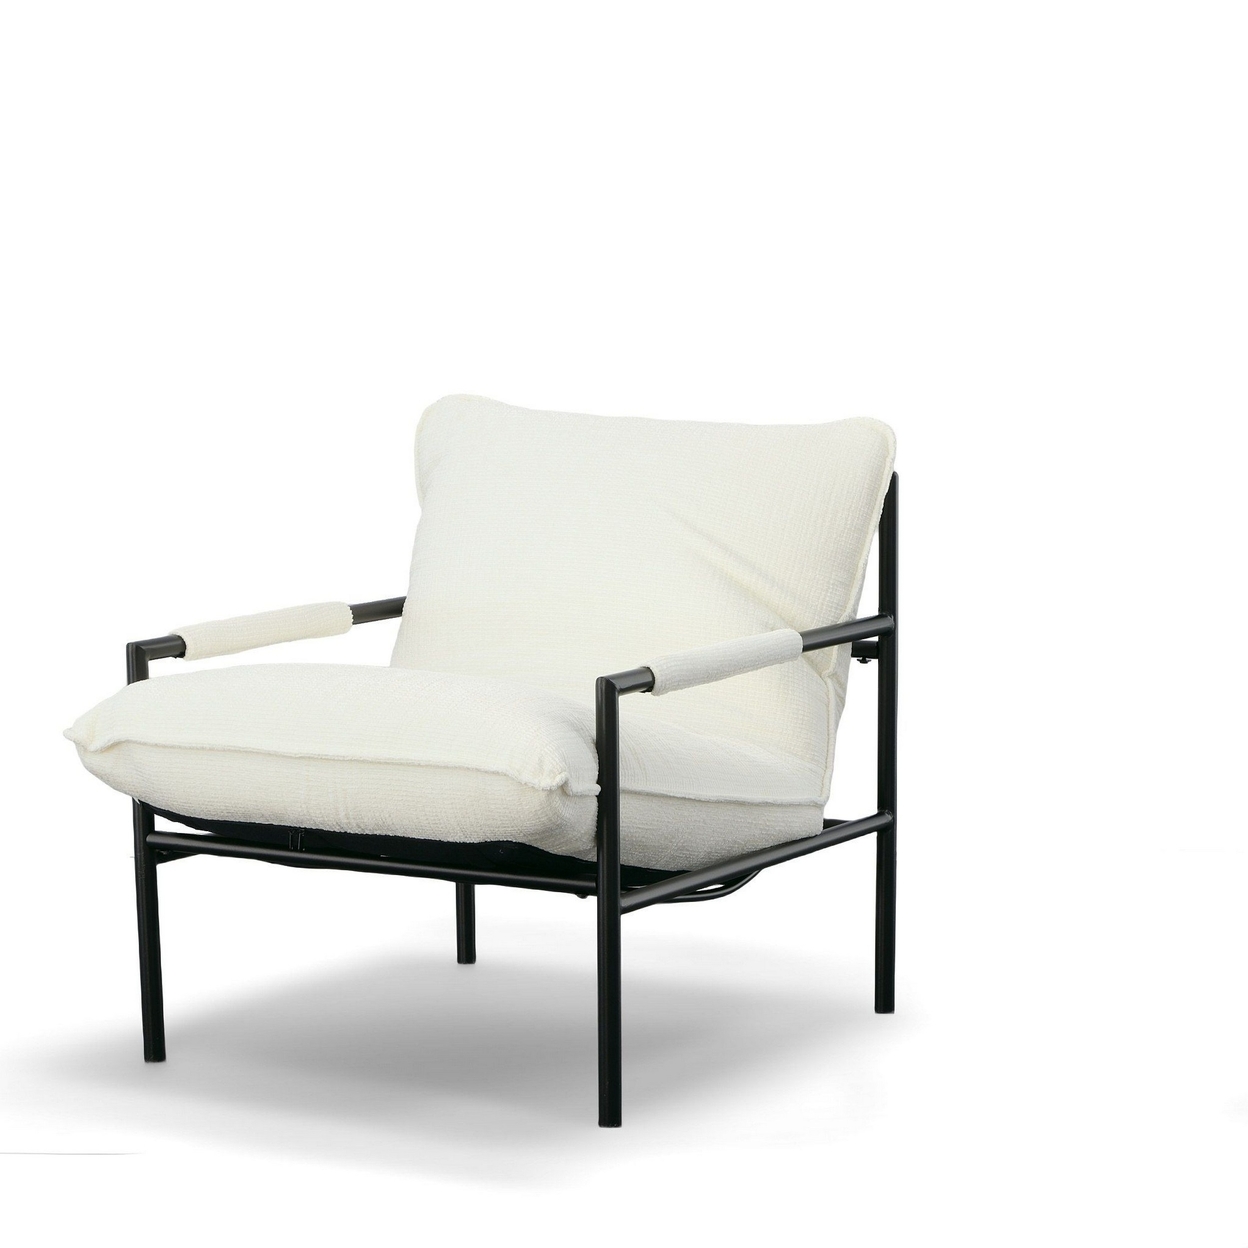 27 Inch Accent Chair, White Fabric, Black Metal Frame, Cushioned Seat - Saltoro Sherpi